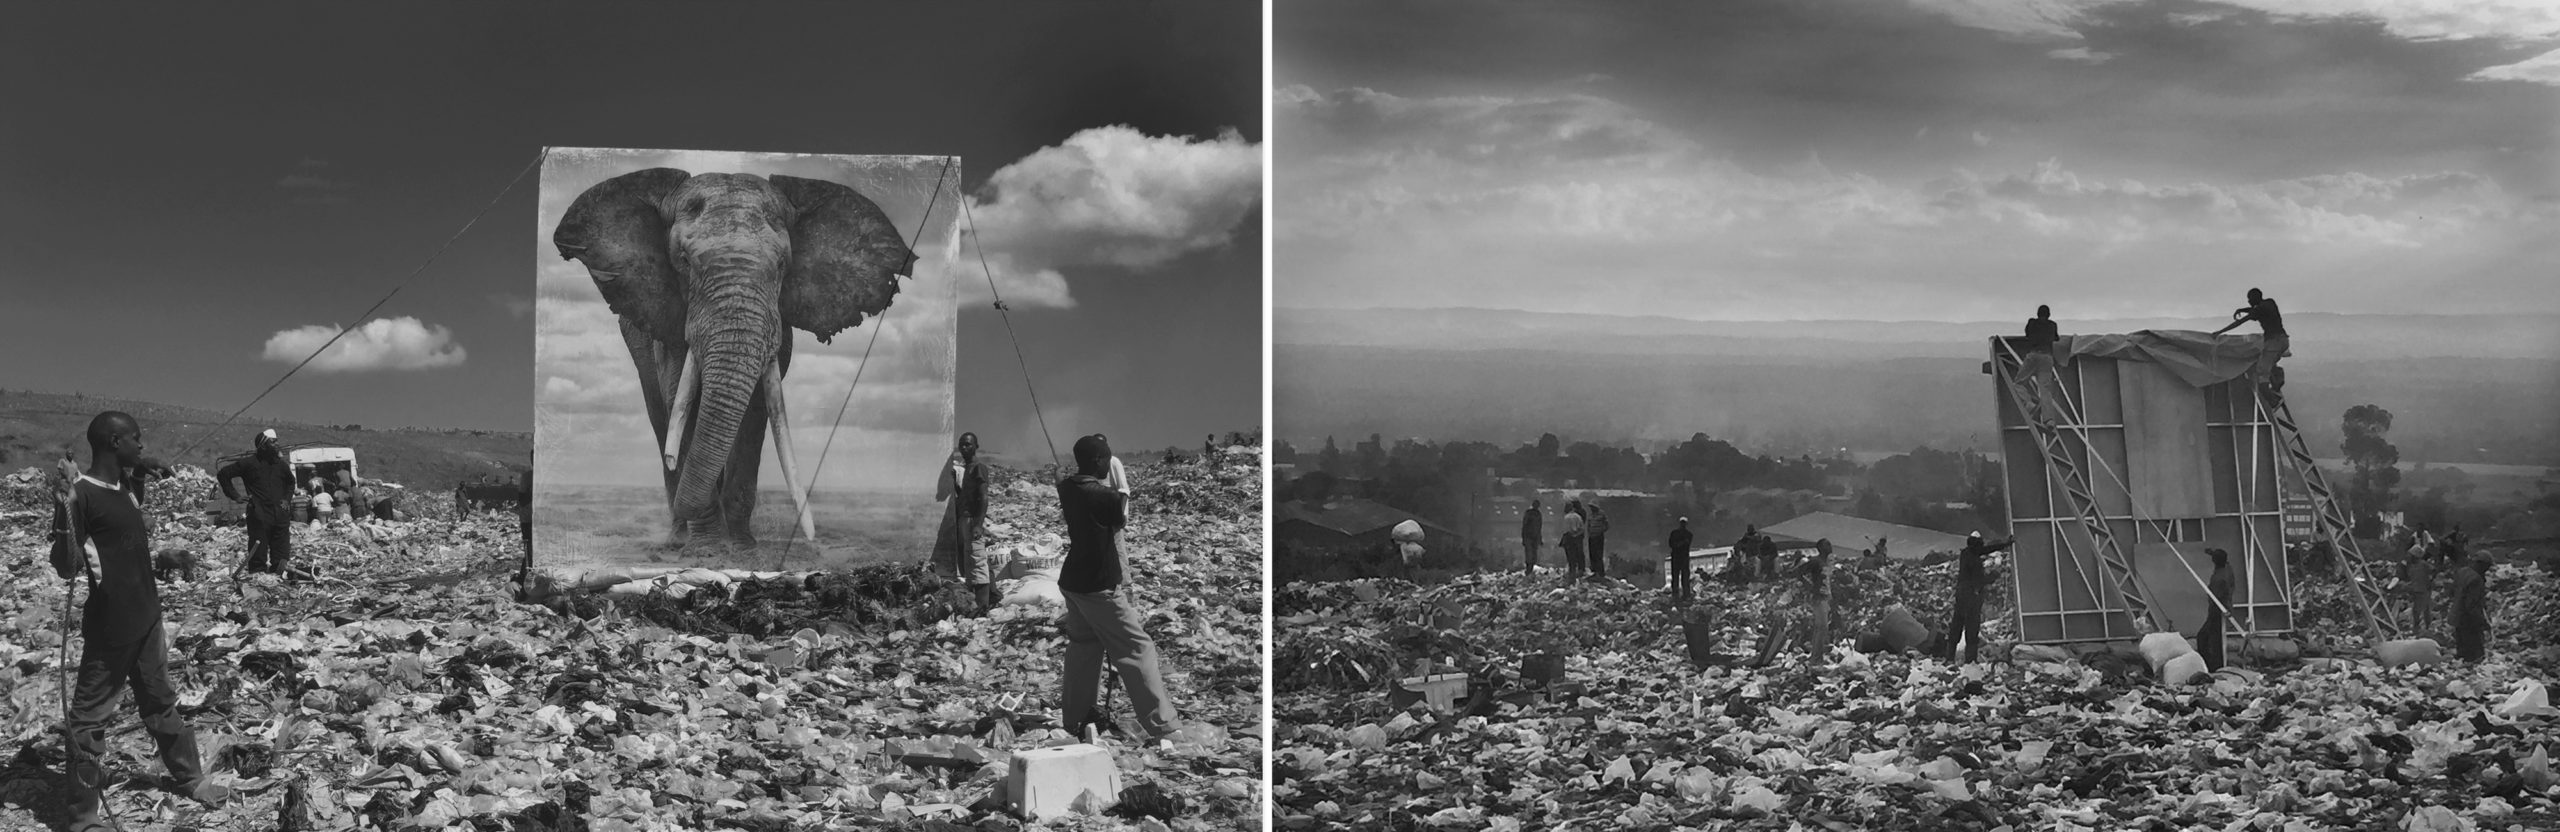 Harrowing Photographs Depict East Africa’s Dystopian Future